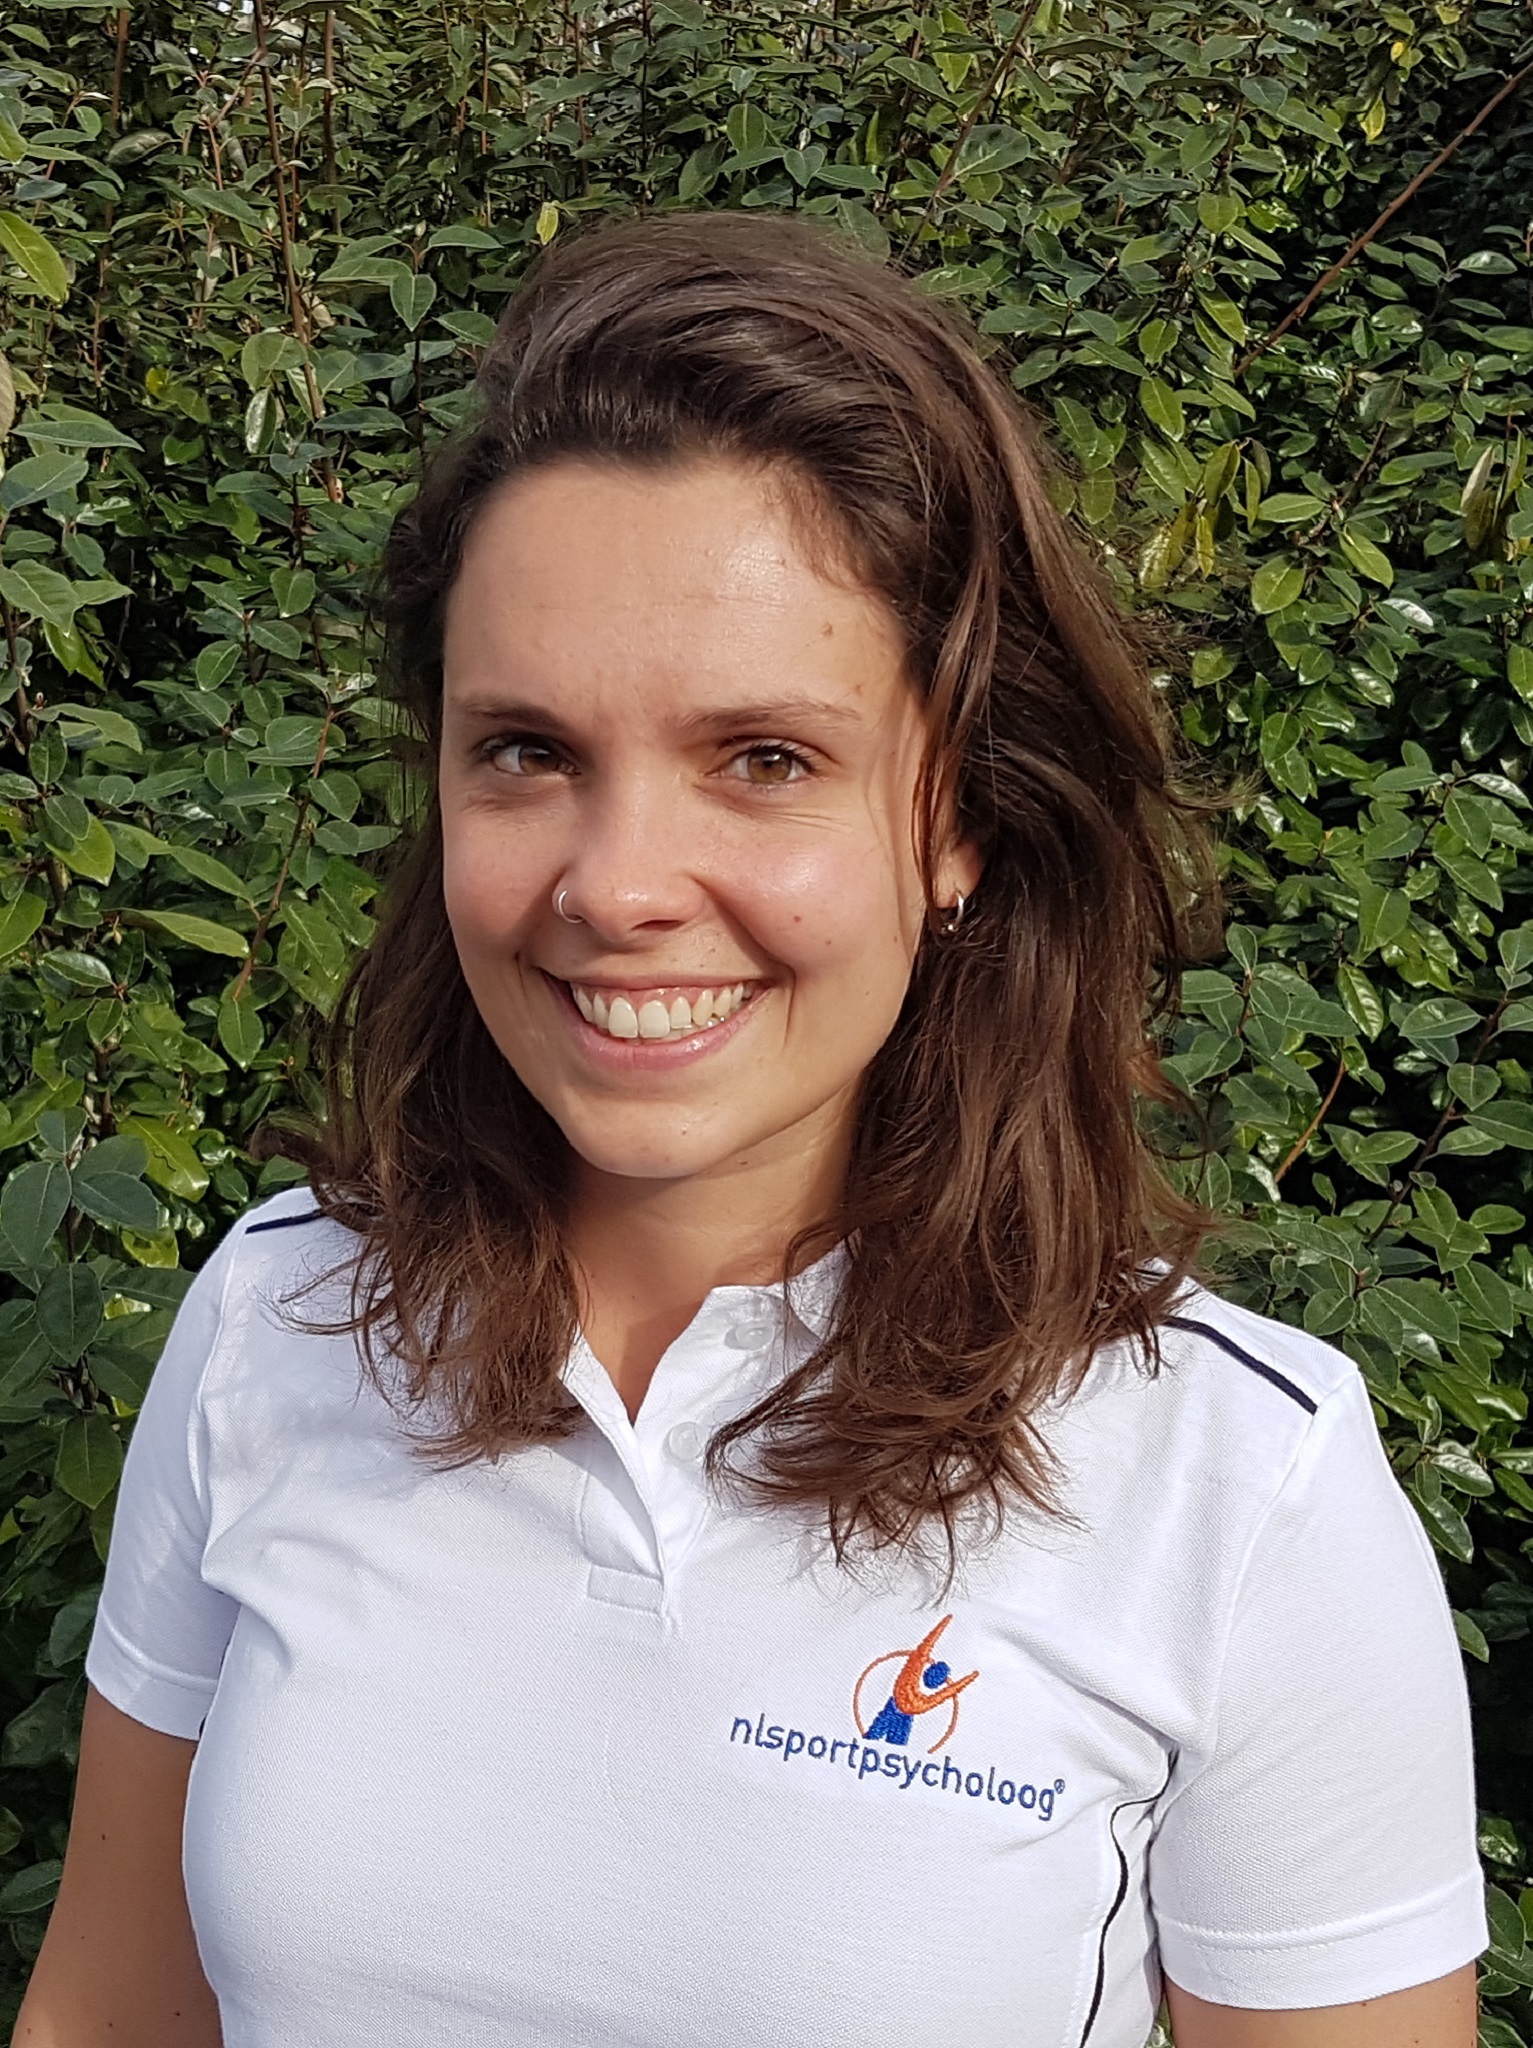 NL sportpsycholoog Katja Cardol – Zuid Holland